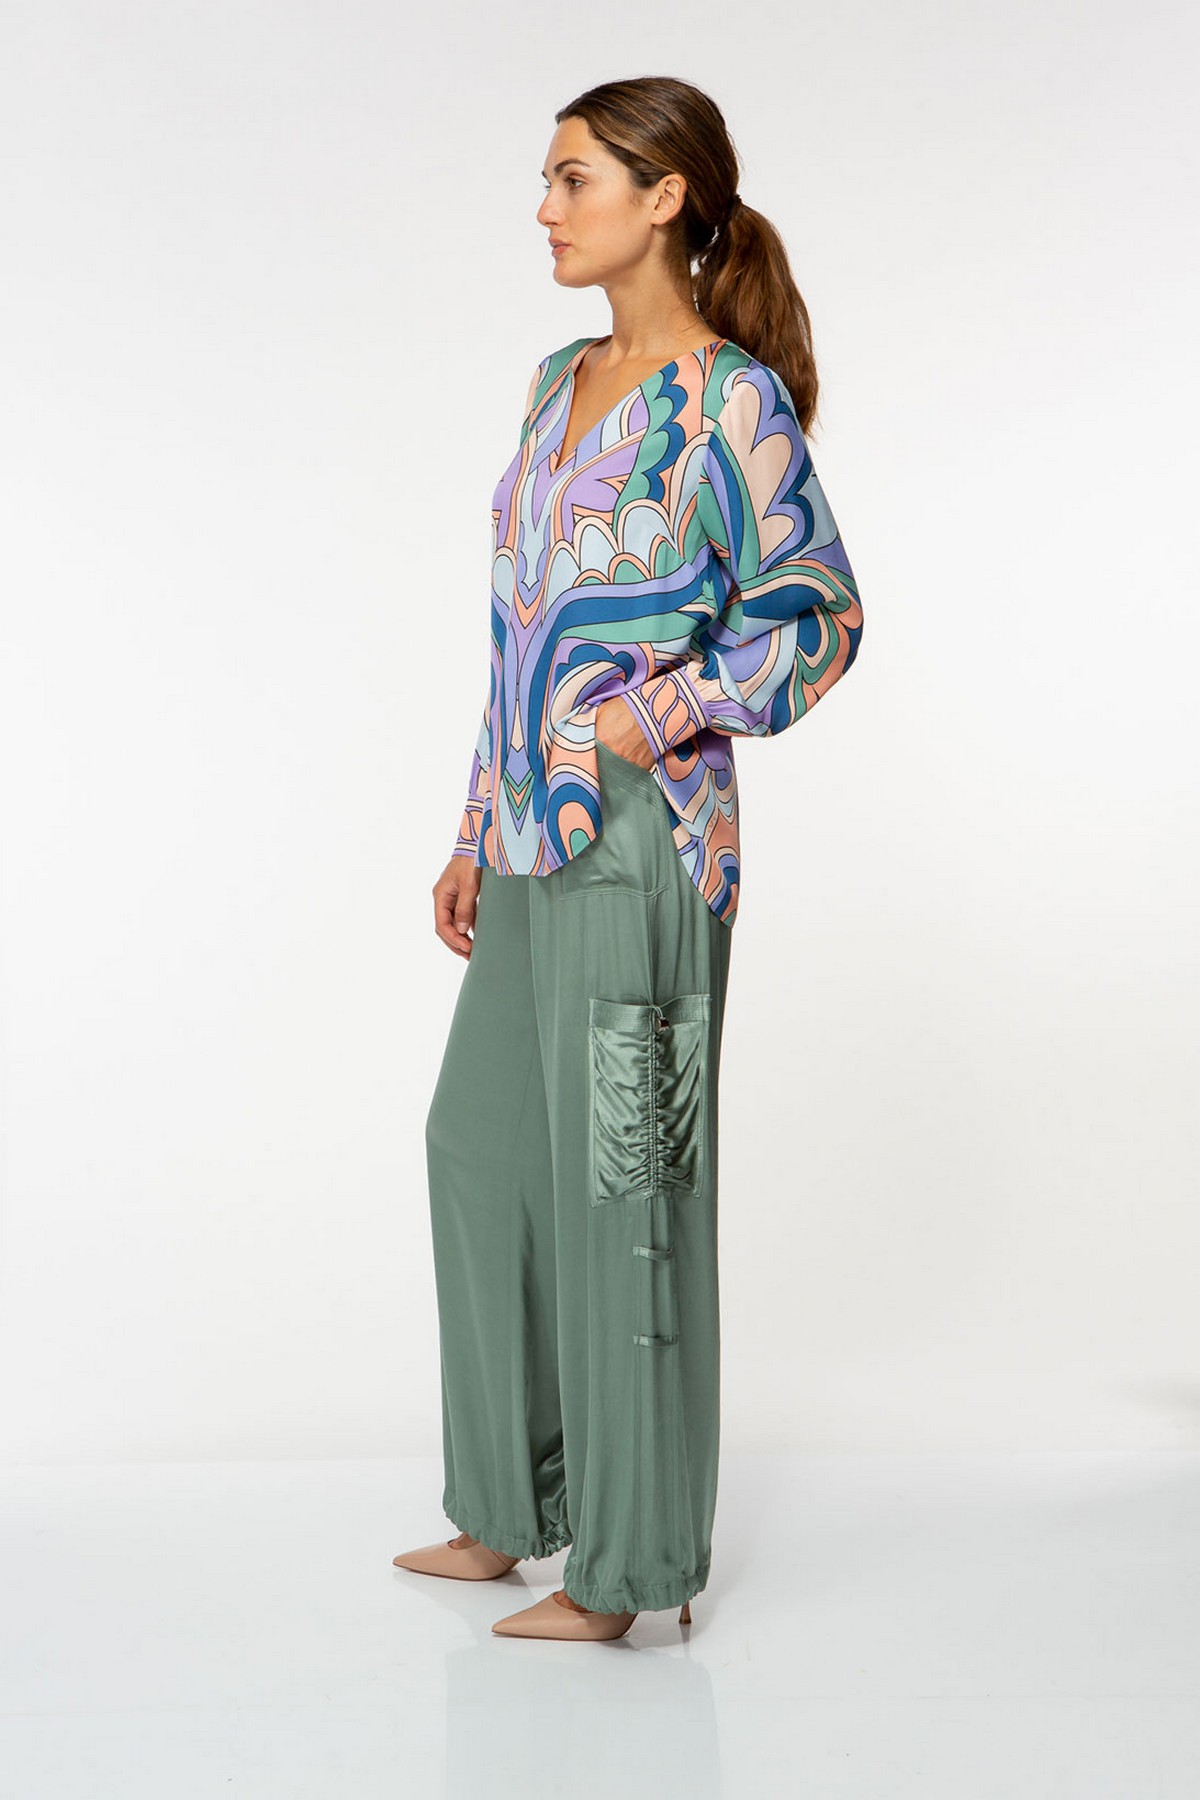 Ivi Collection - Garden spells blouse - Bloes V print lavendel - uitverkocht